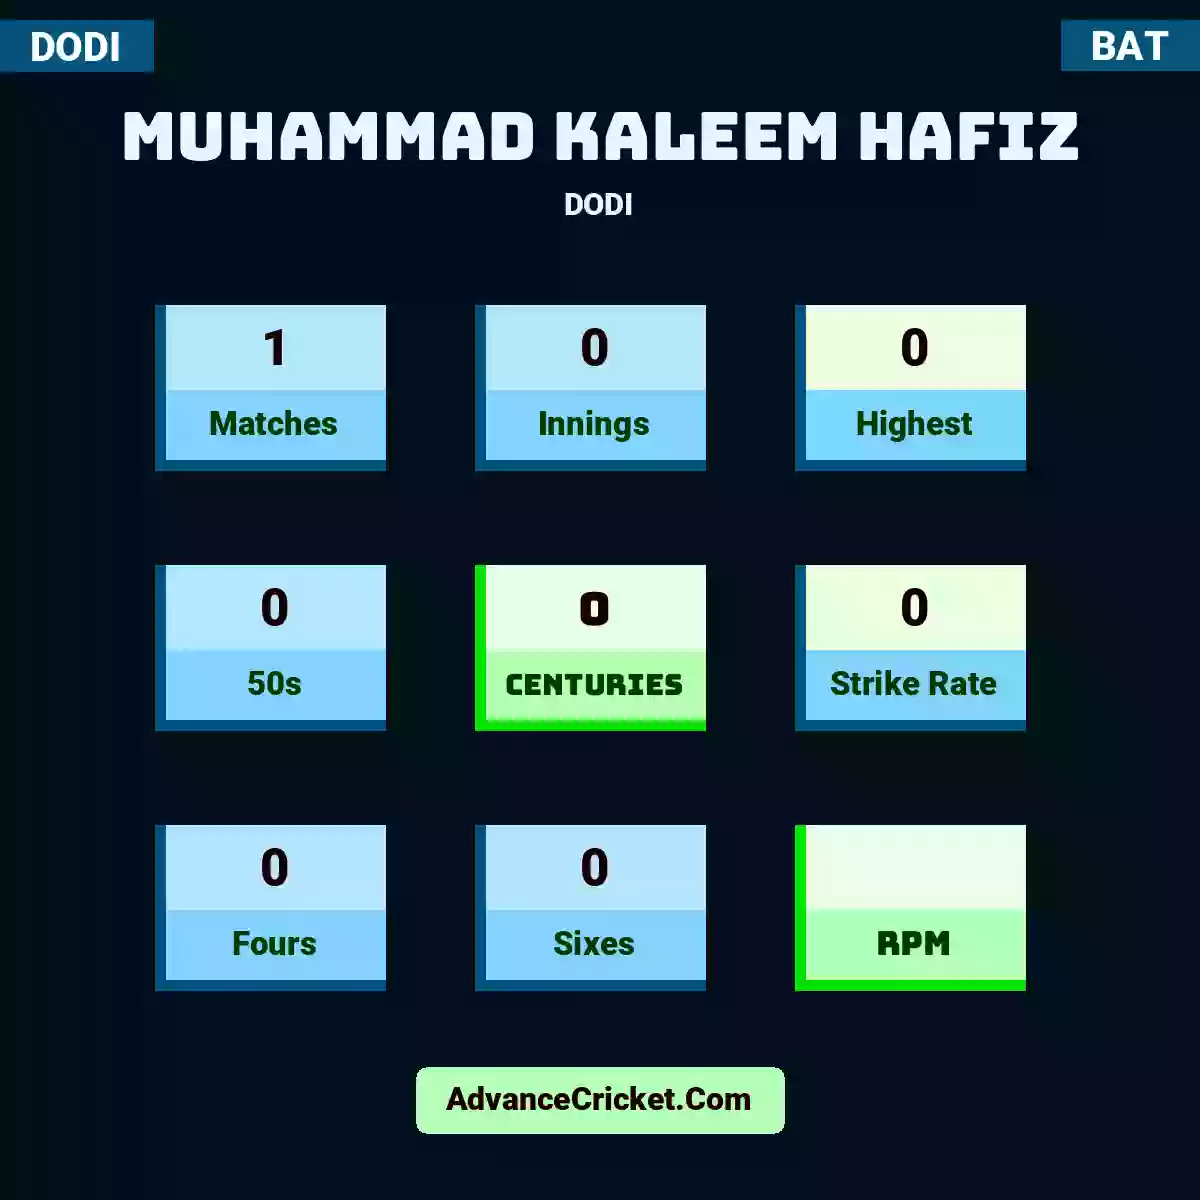 Muhammad Kaleem Hafiz DODI , Muhammad Kaleem Hafiz played 1 matches, scored 0 runs as highest, 0 half-centuries, and 0 centuries, with a strike rate of 0. M.Hafiz hit 0 fours and 0 sixes.